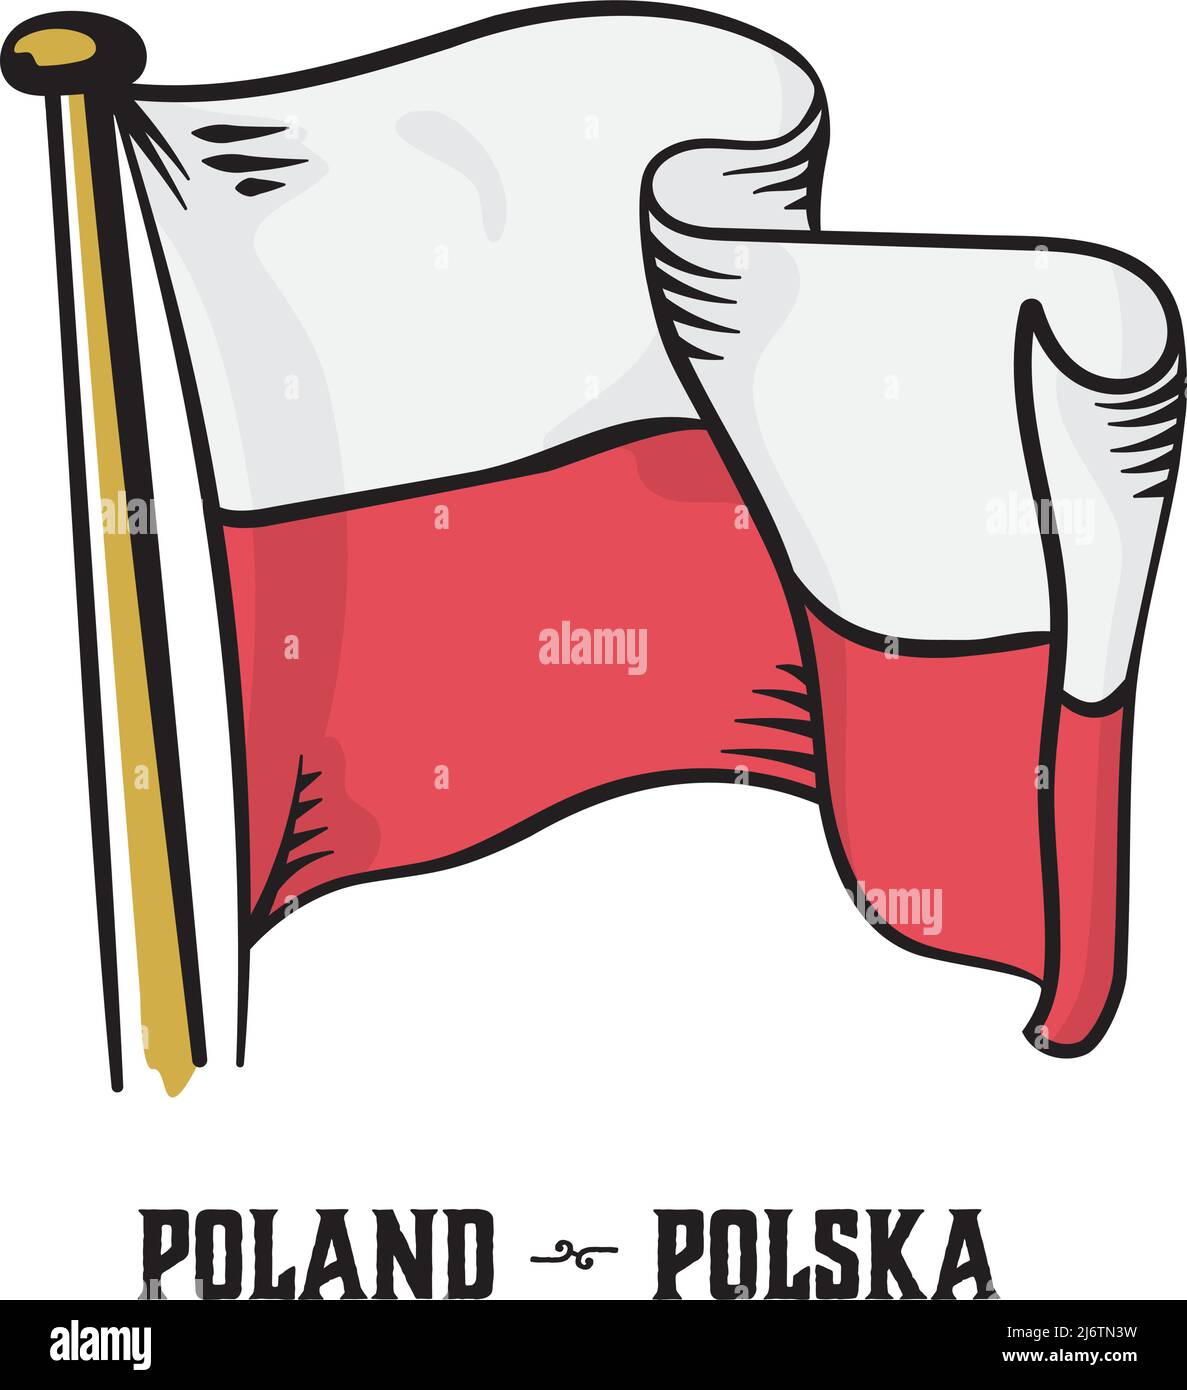 Vintage engraving style Polish flag vector illustration Stock Vector